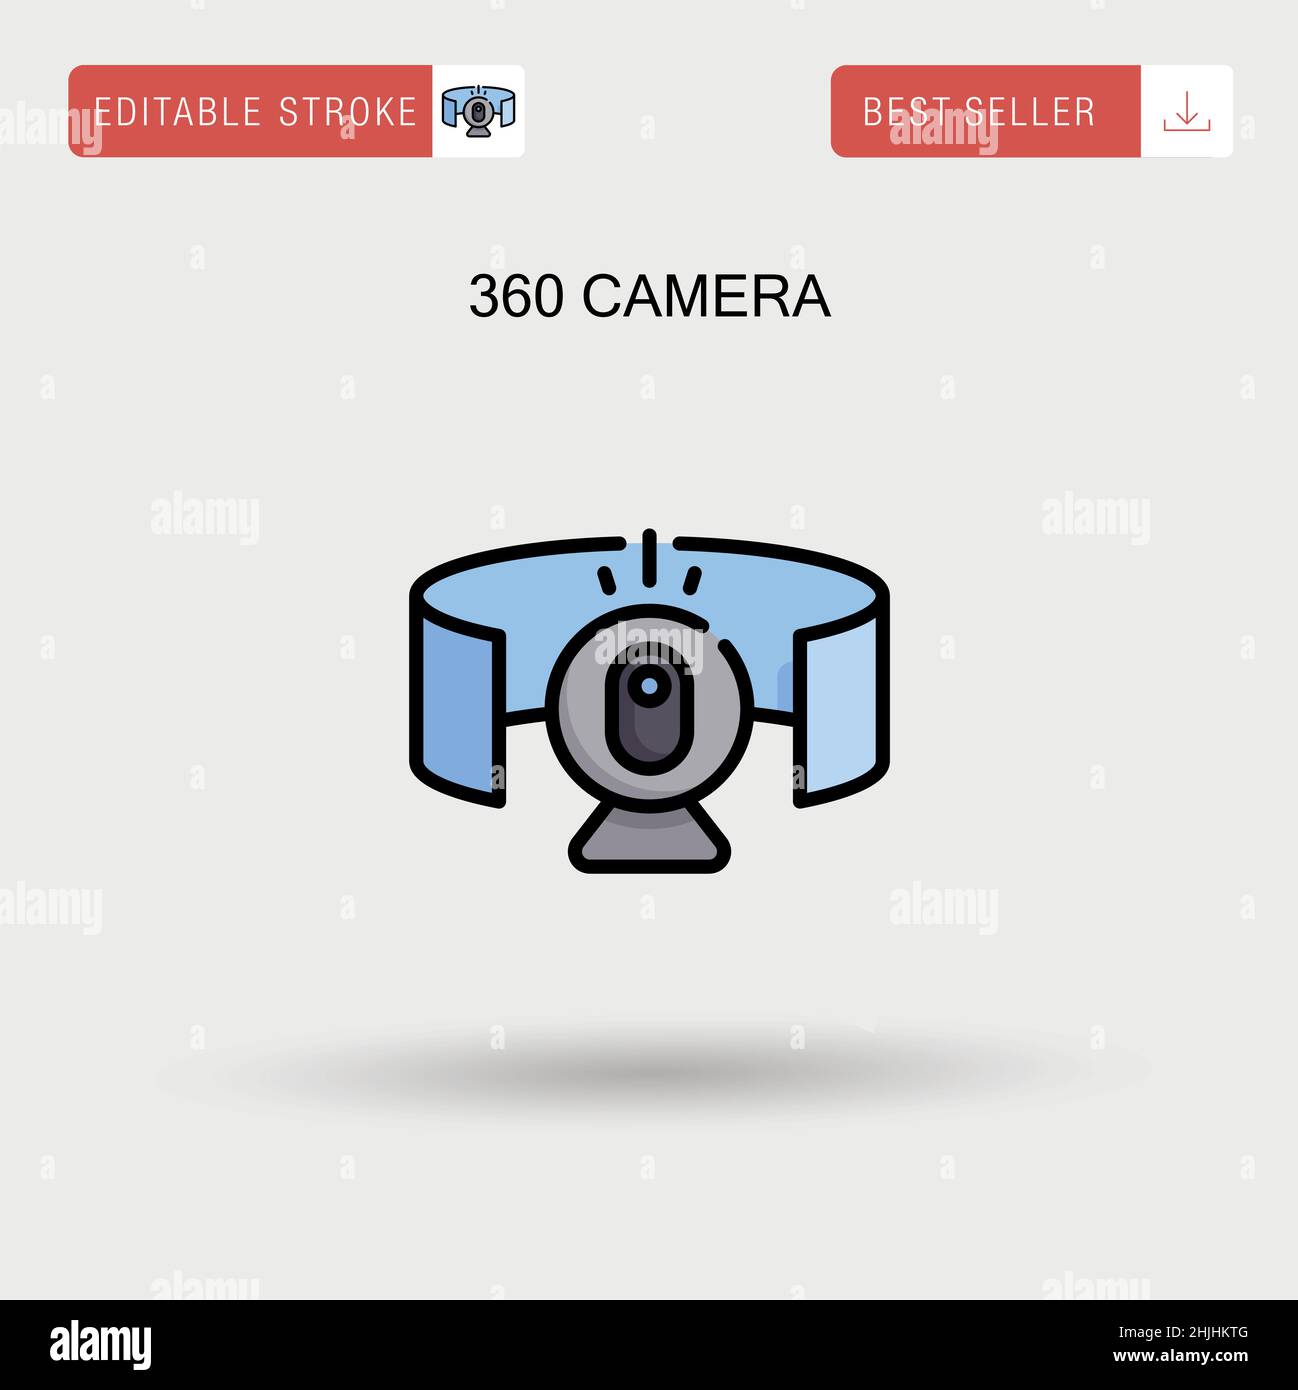 360 Camera Vector Eps 10 Stock Vector (Royalty Free) 778353790